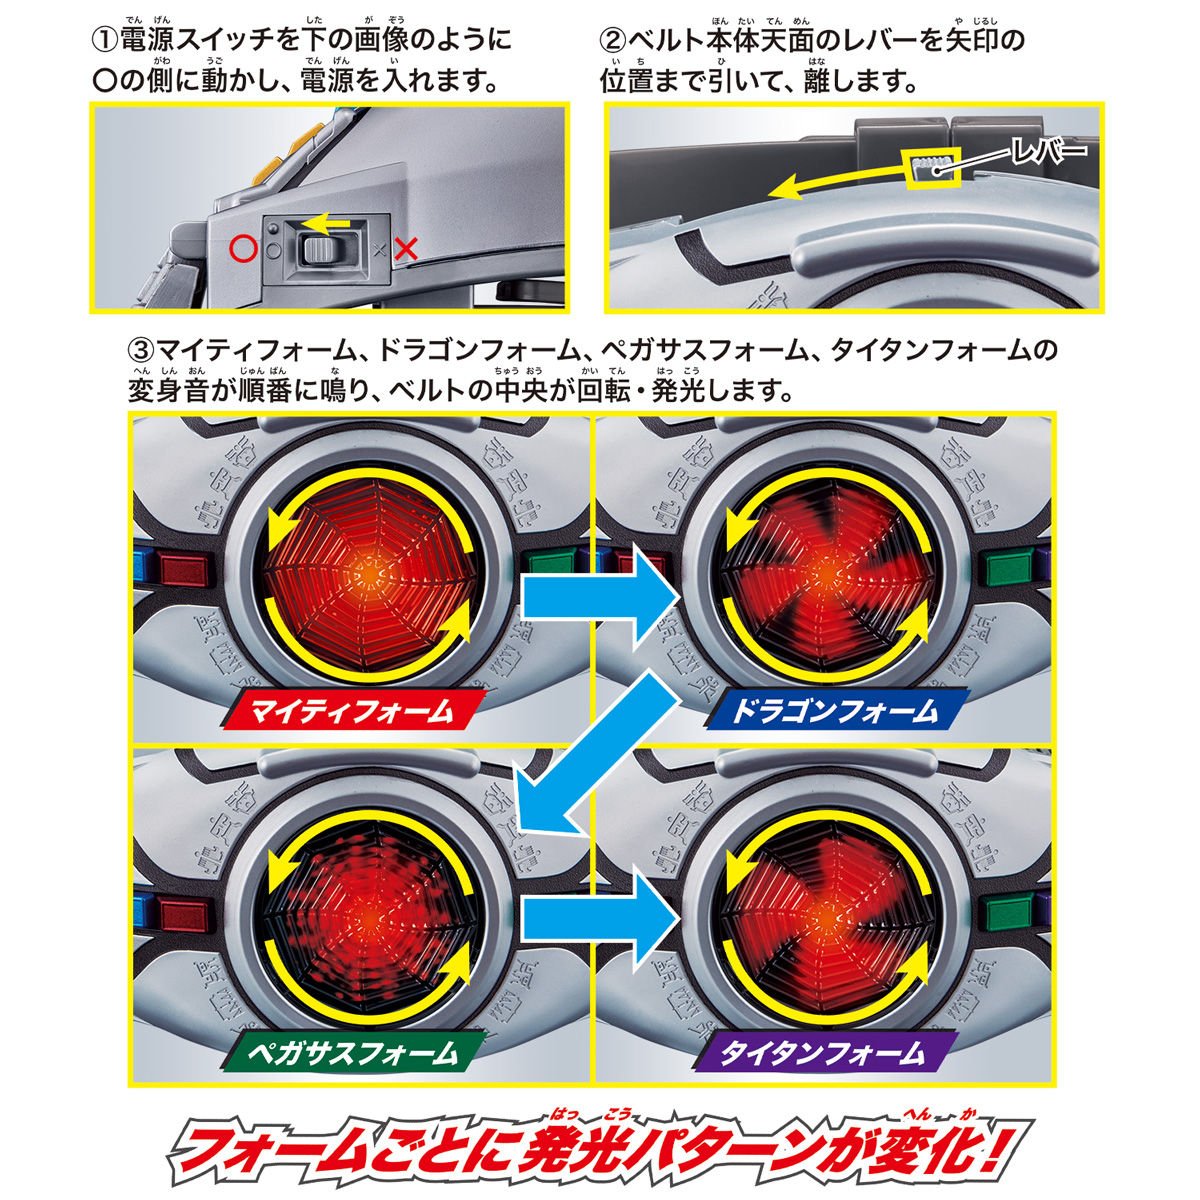 2000] Kuuga: Sonic Wave DX Henshin Belt – CSTOYS INTERNATIONAL